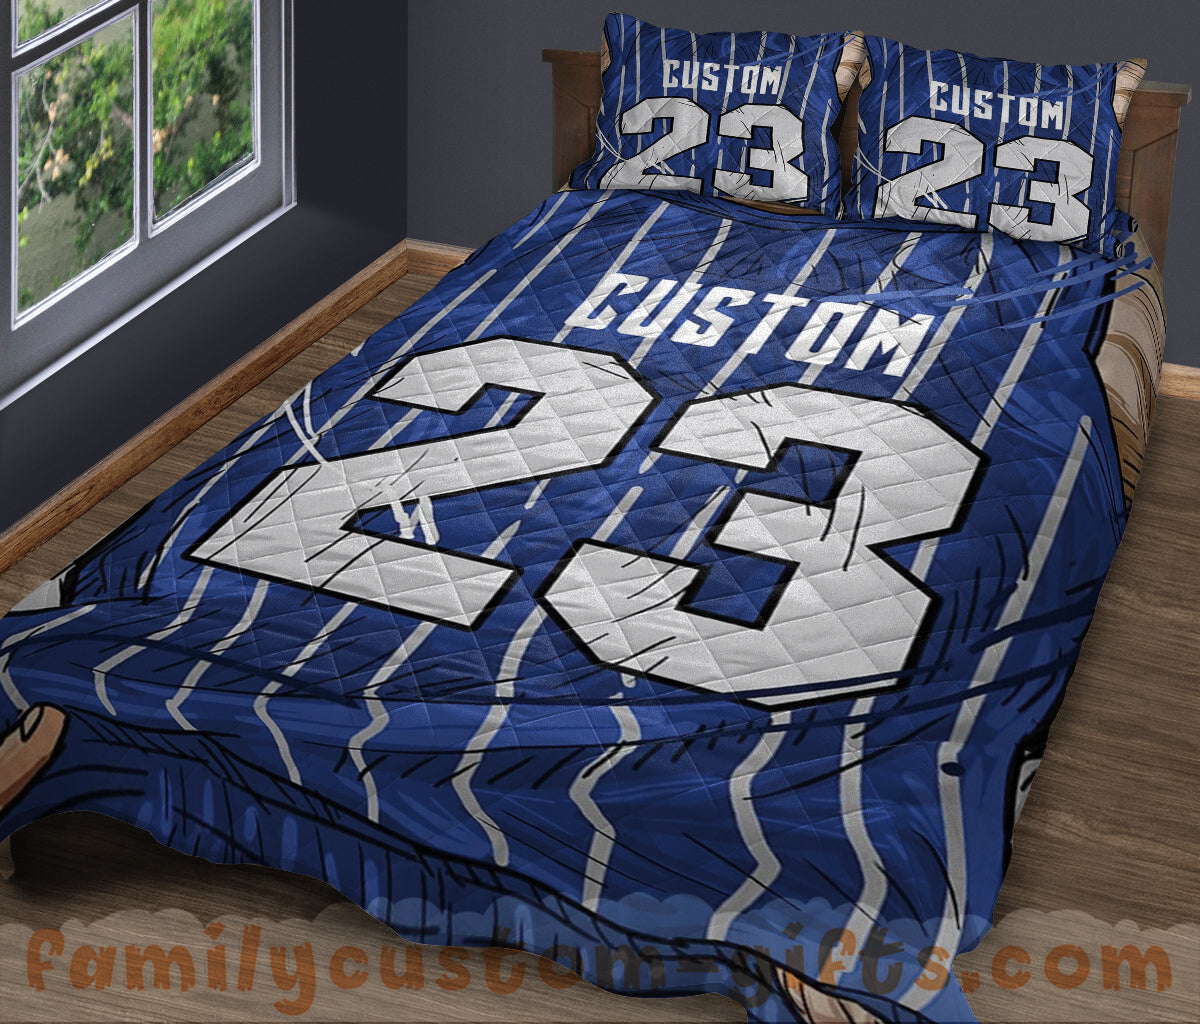 Custom Quilt Sets Orlando Jersey Personalized Basketball Premium Quilt Bedding for Boys Girls Men Women